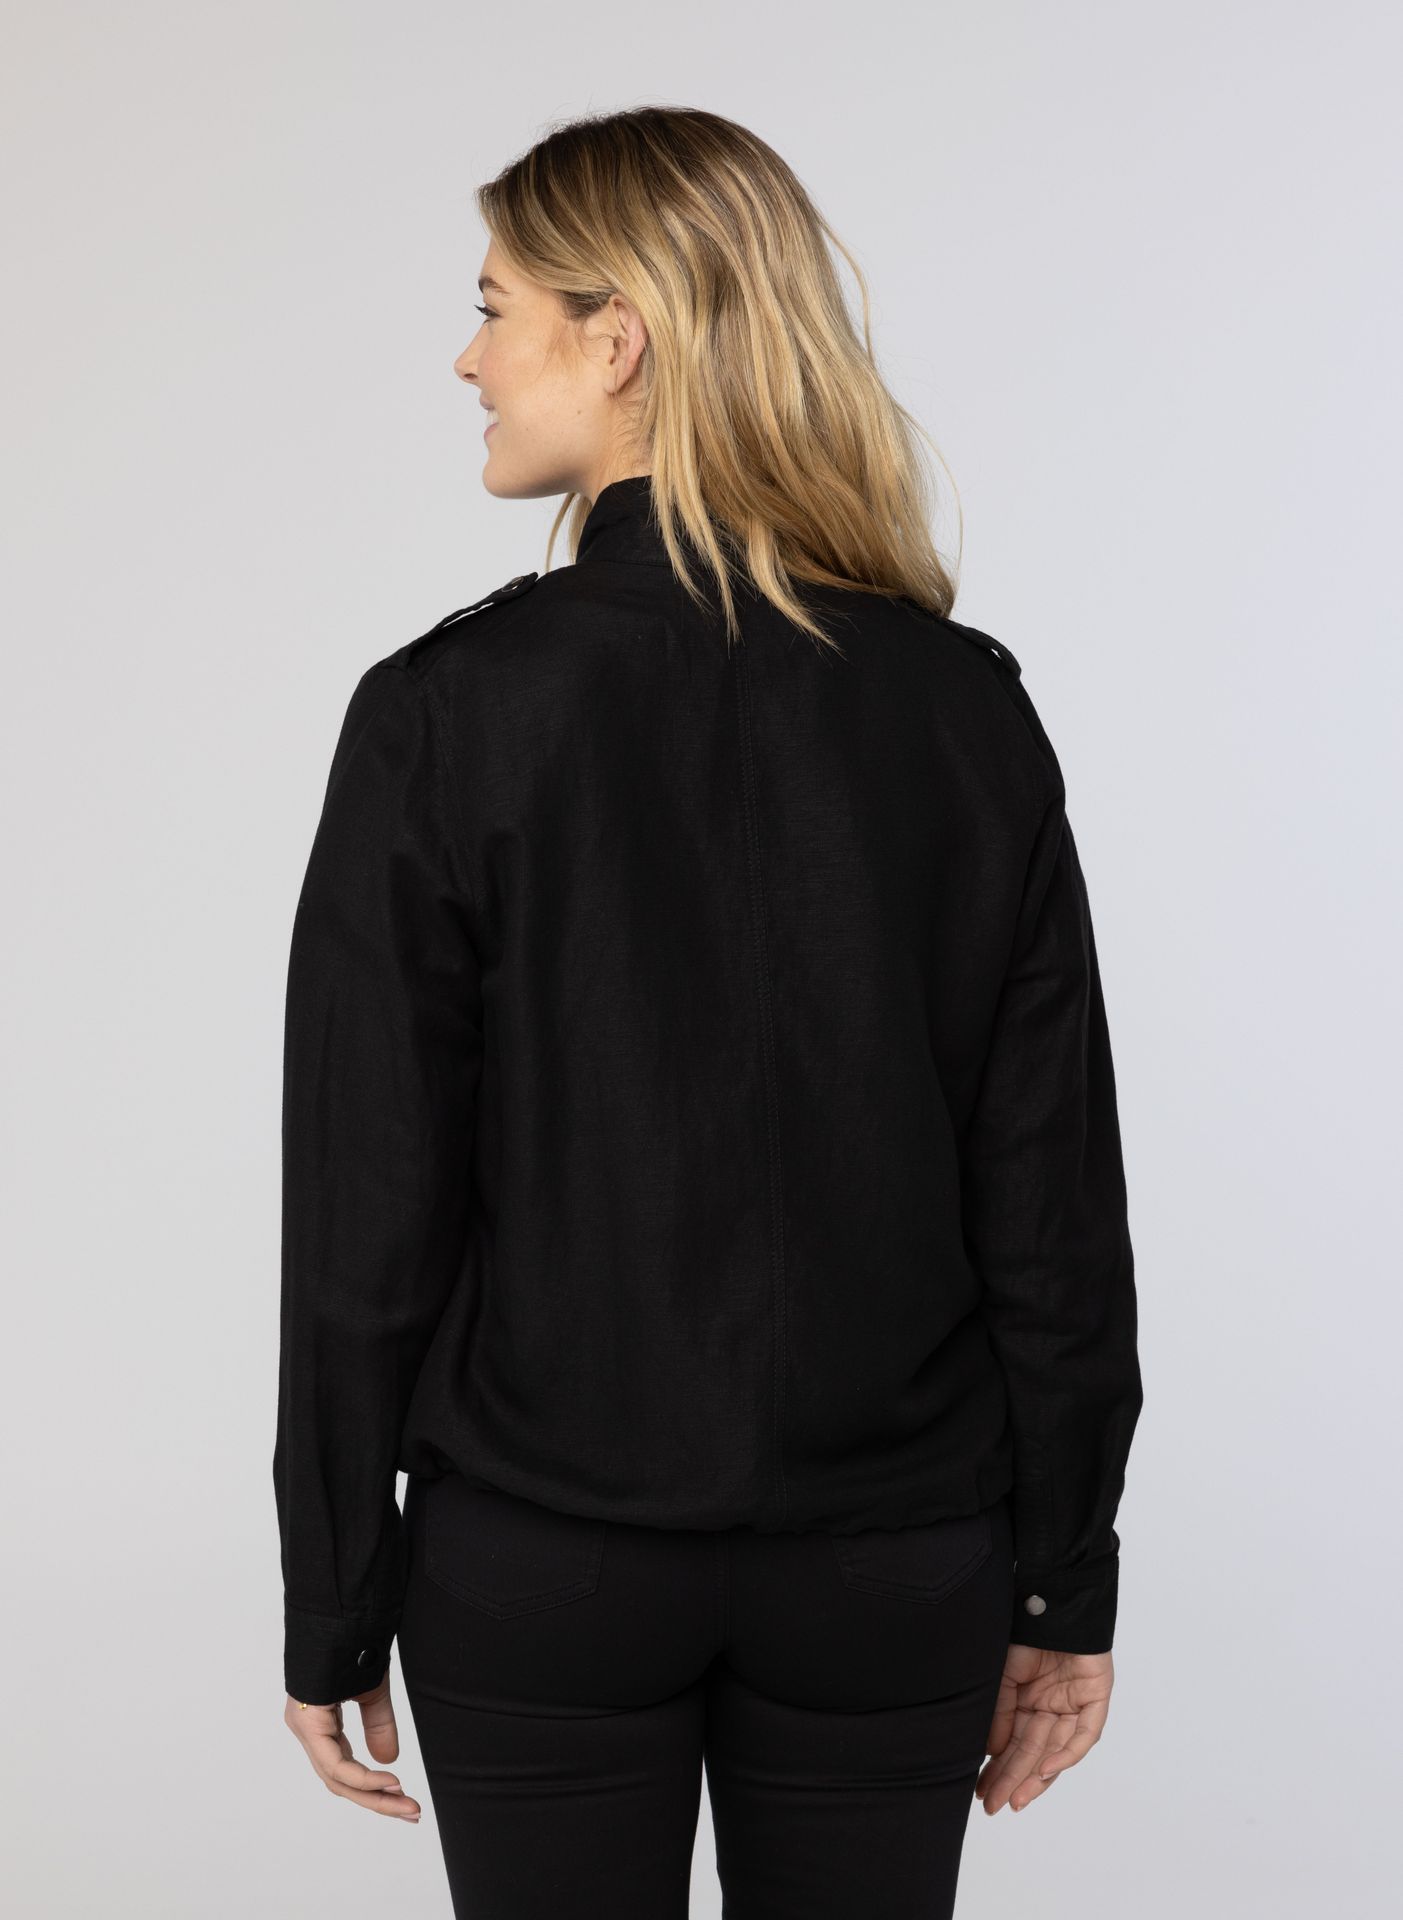 Norah Zwarte jacket black 211085-001